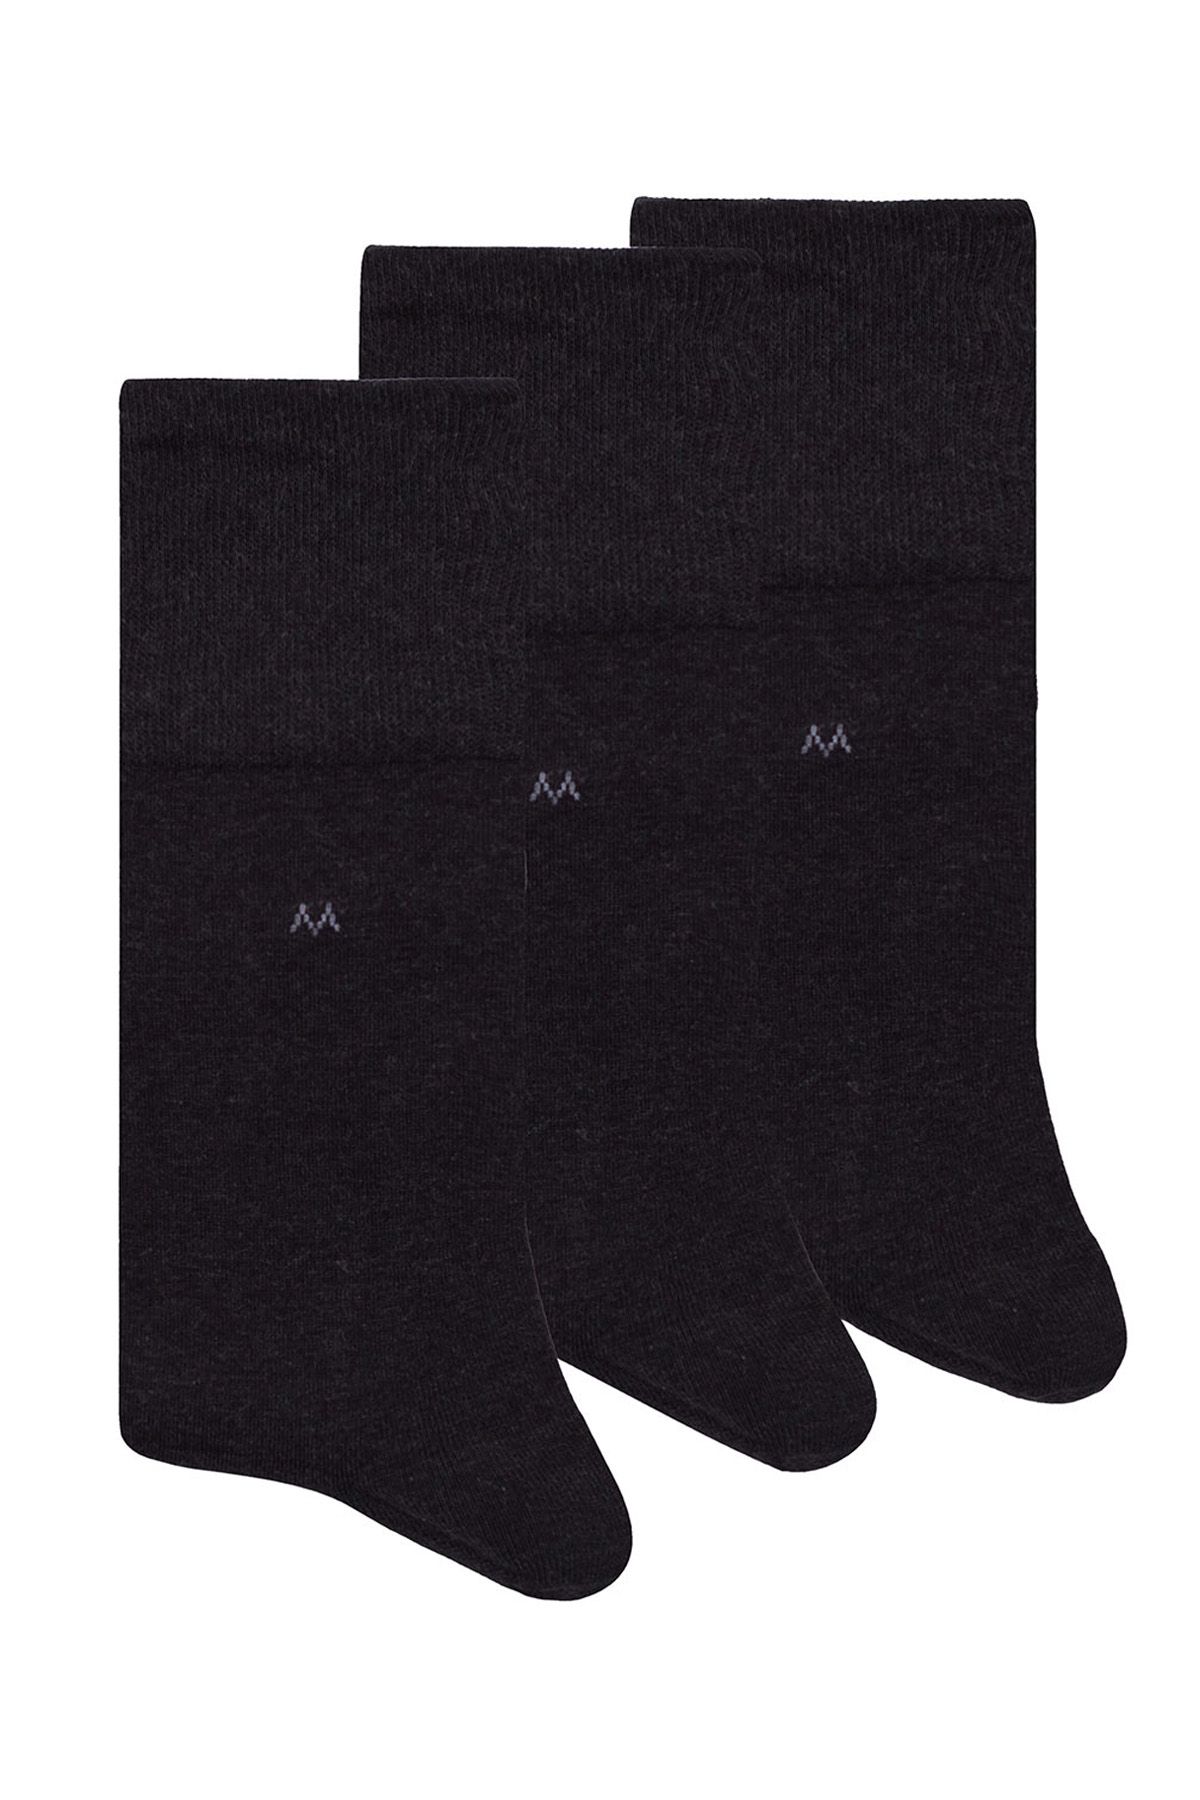 Hemington Pamuklu Antrasit Üçlü Çorap Seti